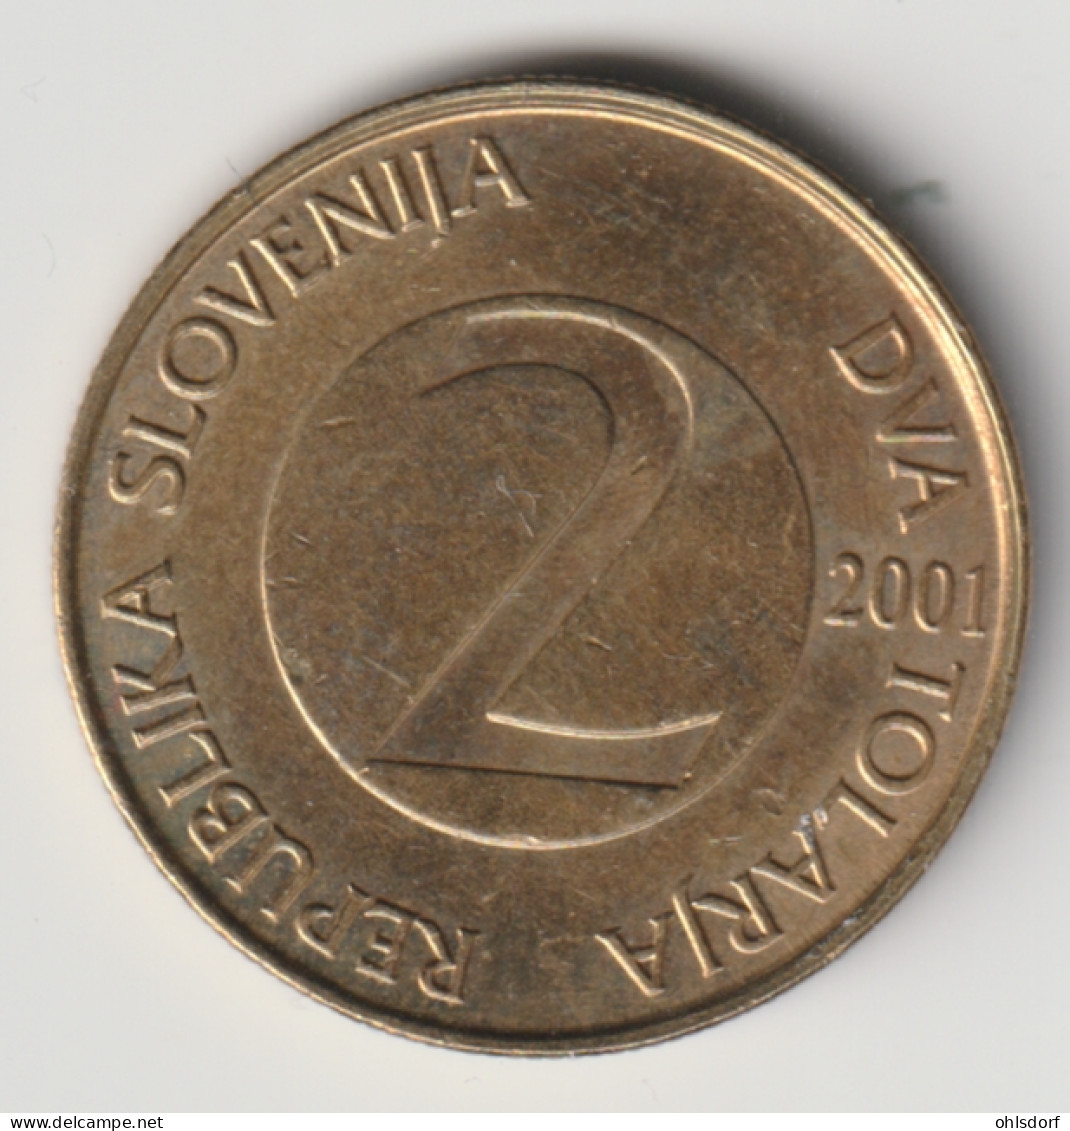 SLOVENIA 2001: 1 Tolar, KM 5 - Slowenien